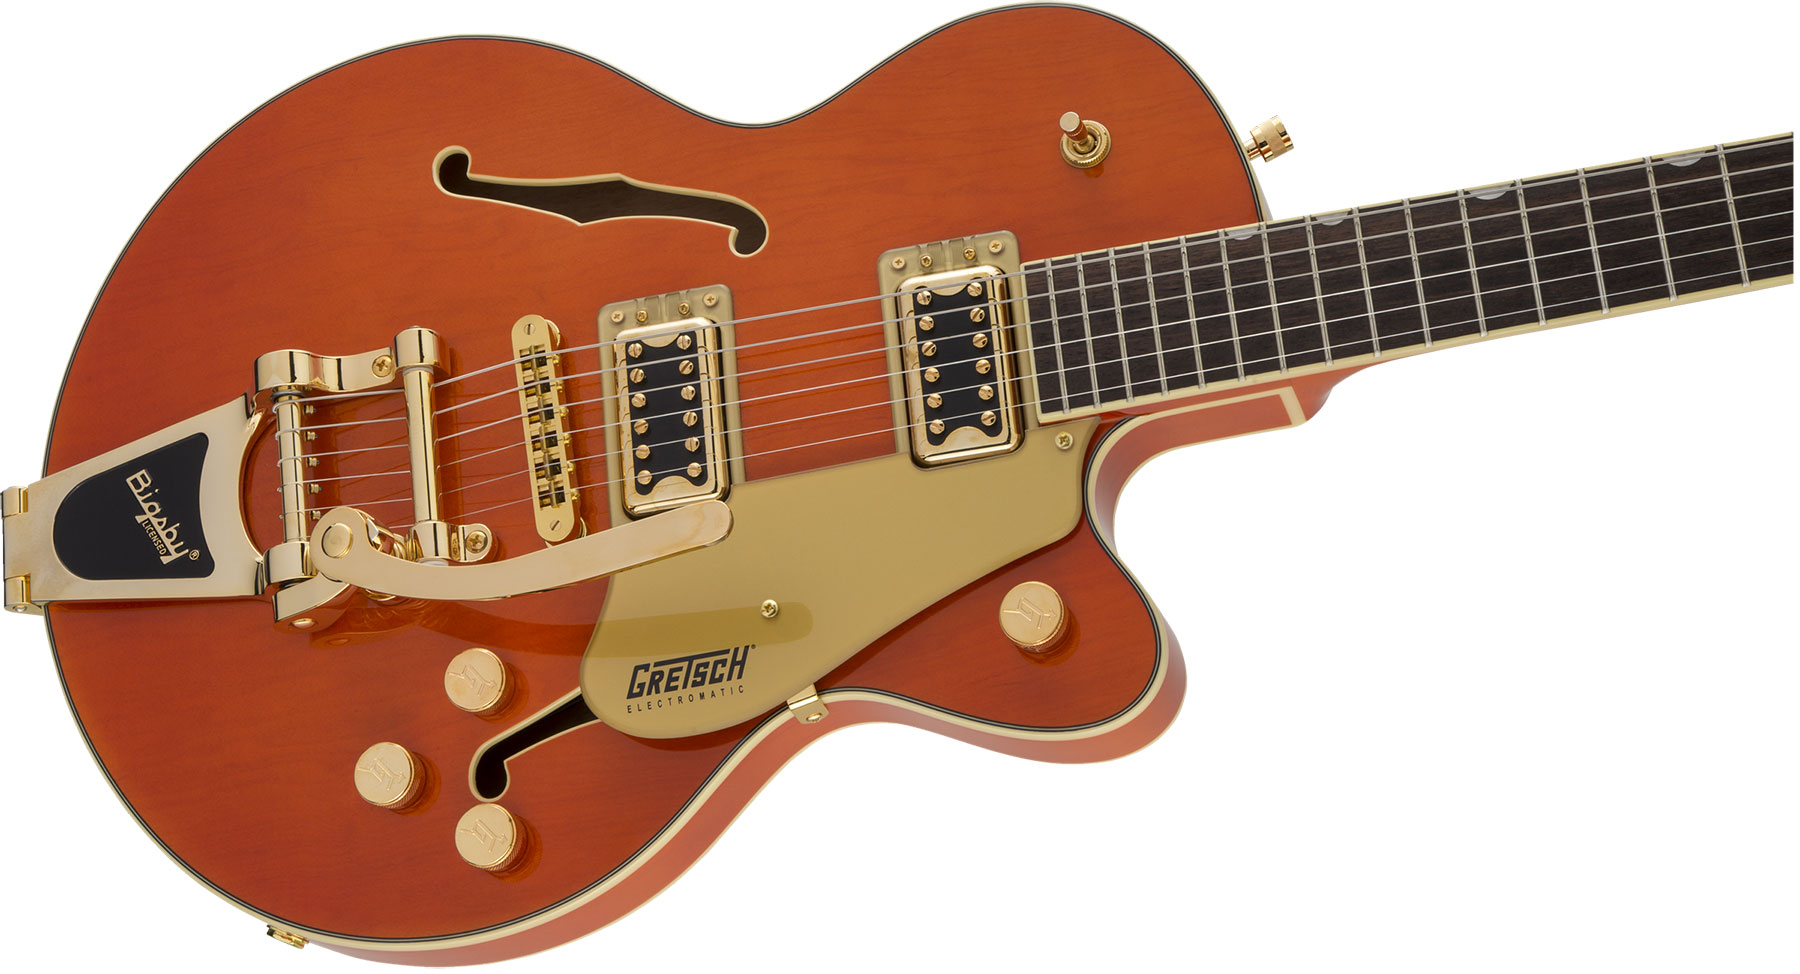 Gretsch G5655tg Electromatic Center Block Jr. Hh Bigsby Lau - Orange Stain - Semi hollow elektriche gitaar - Variation 2